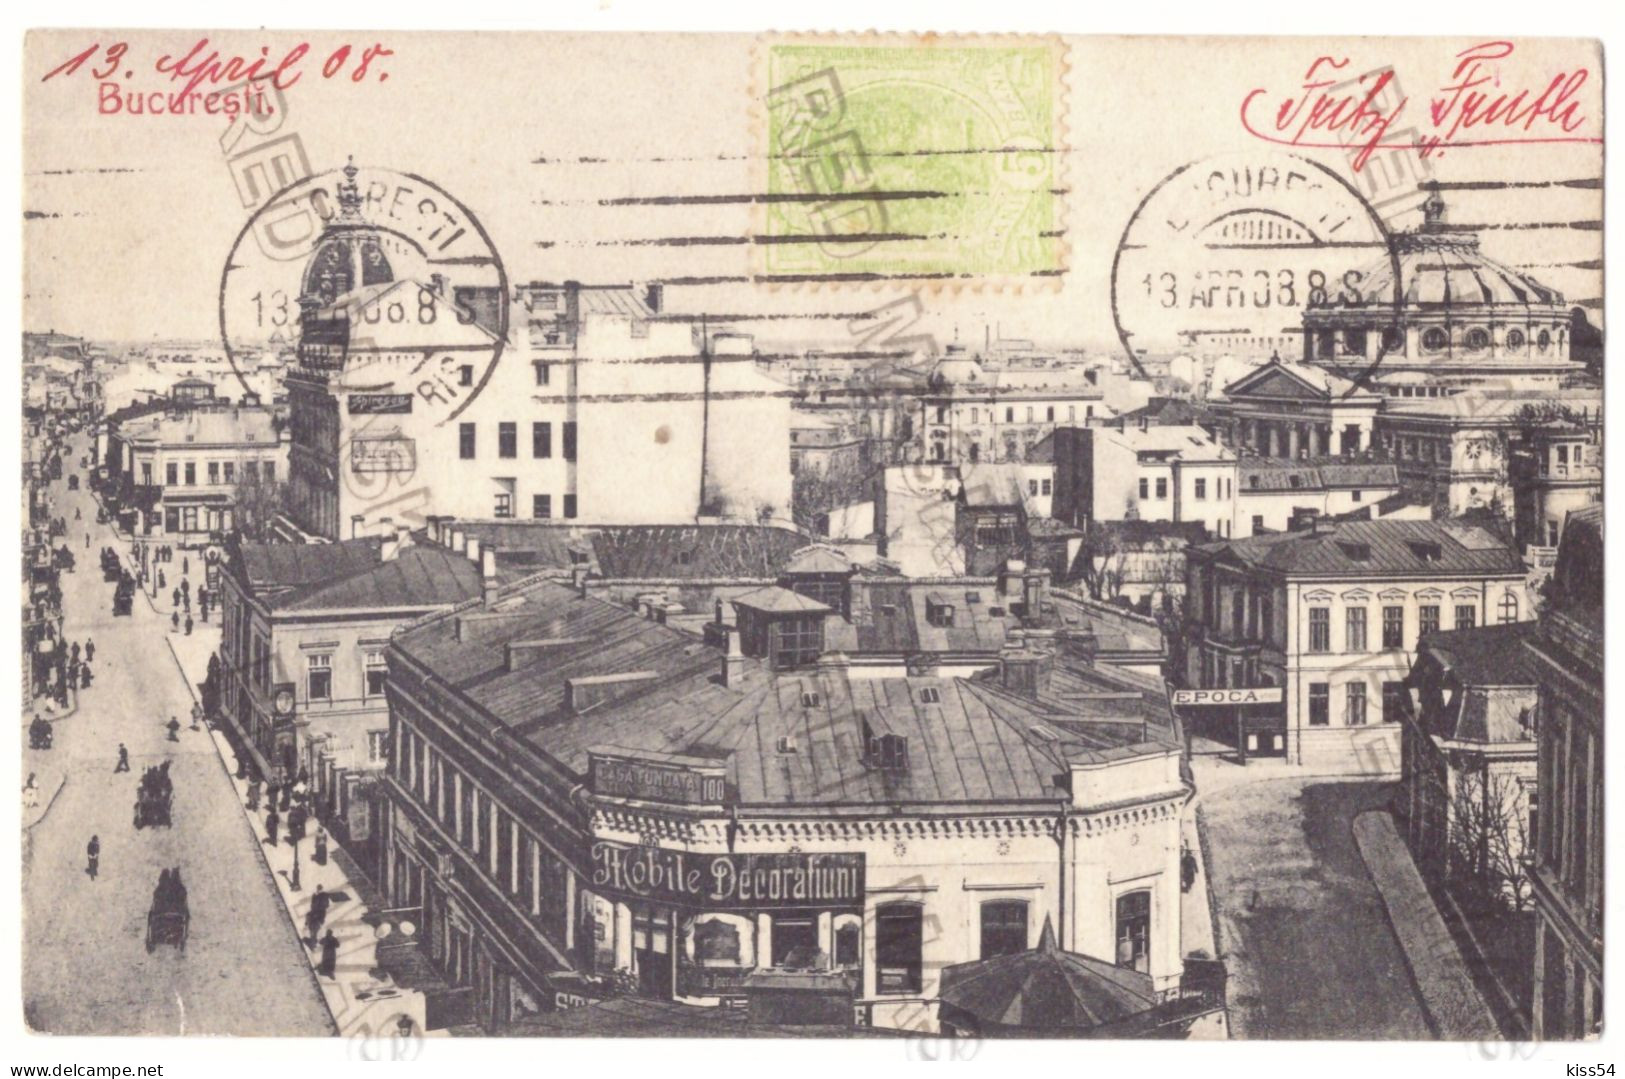 RO - 25210 BUCURESTI, Stampila CONSULAT, Romania - Old Postcard - Used - 1908 - Roumanie